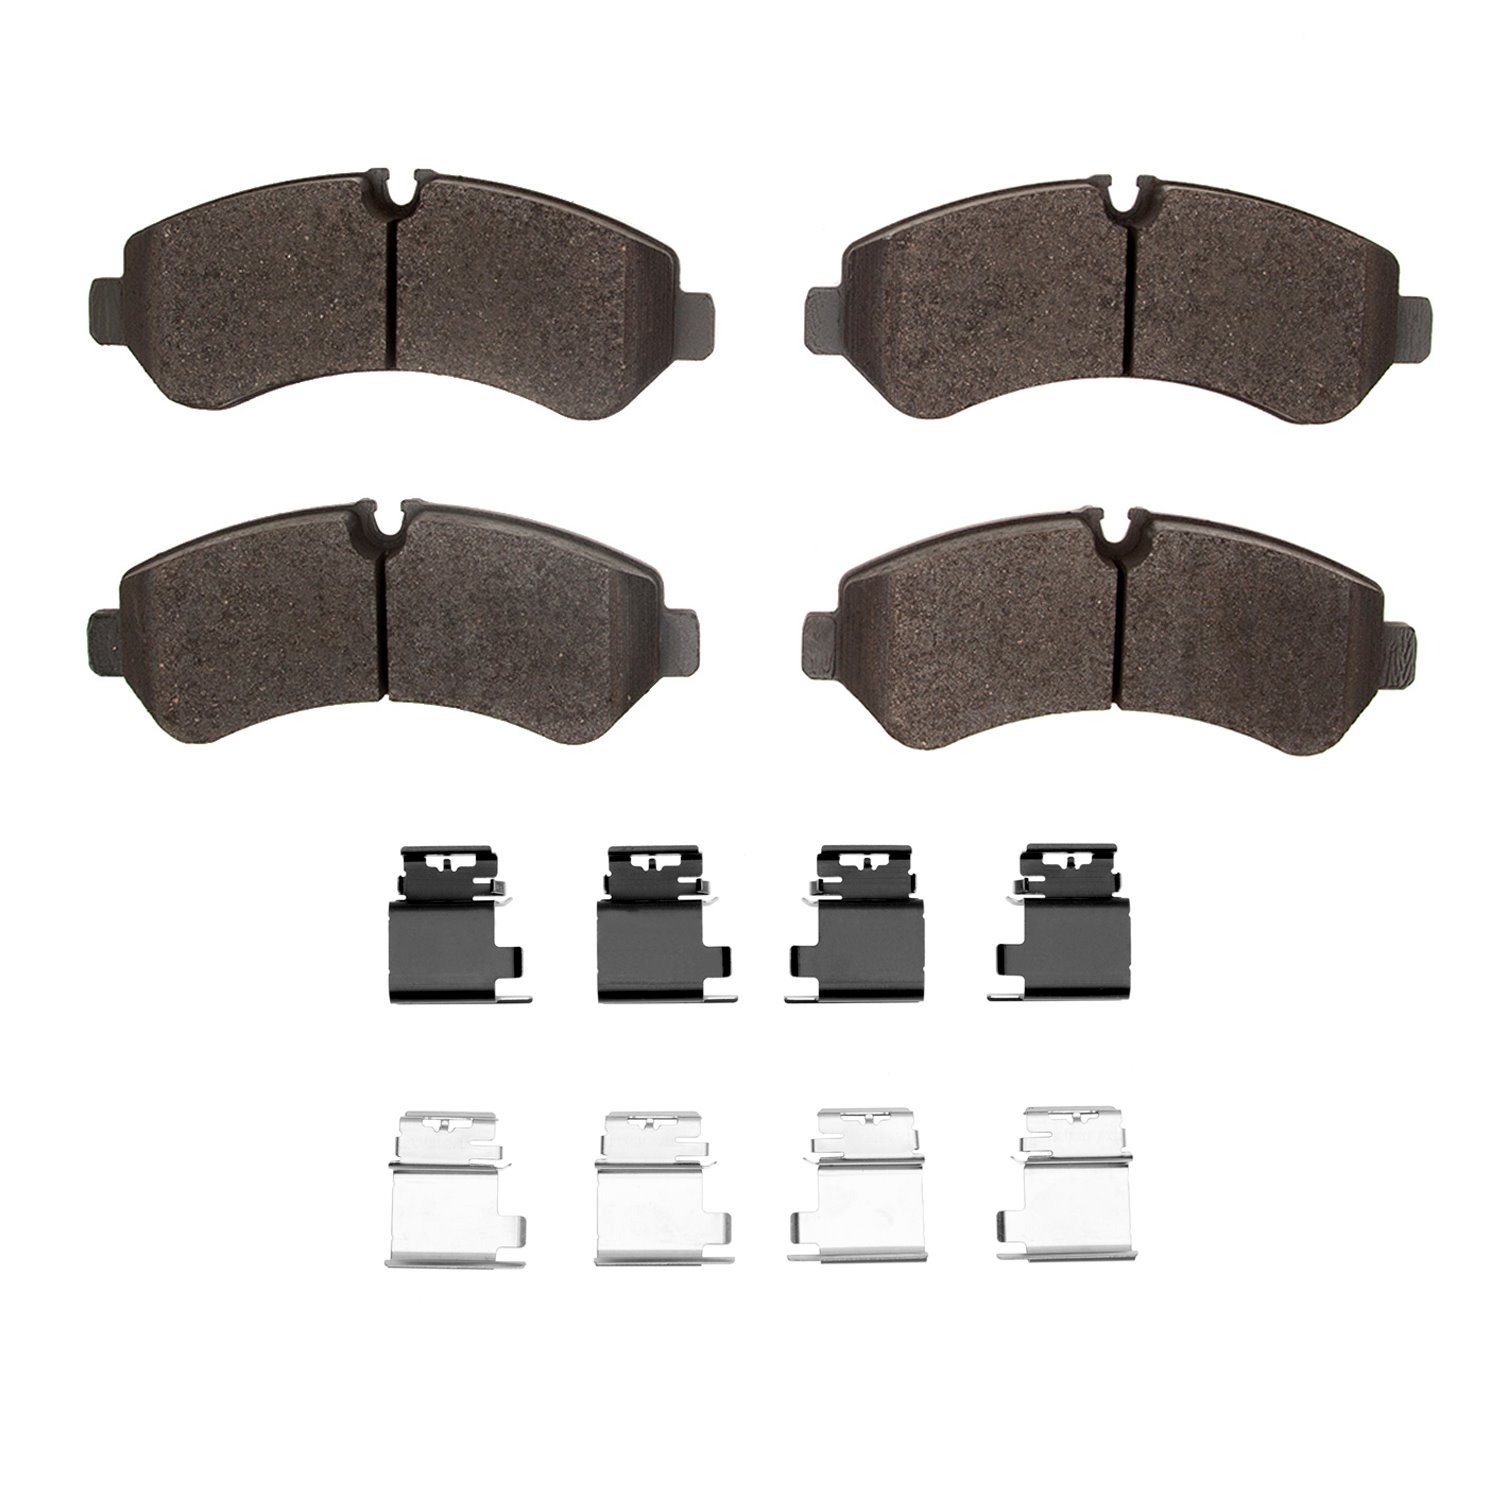 Optimum OE Brake Pads & Hardware Kit, Fits Select Fits Multiple Makes/Models, Position: Rear Right